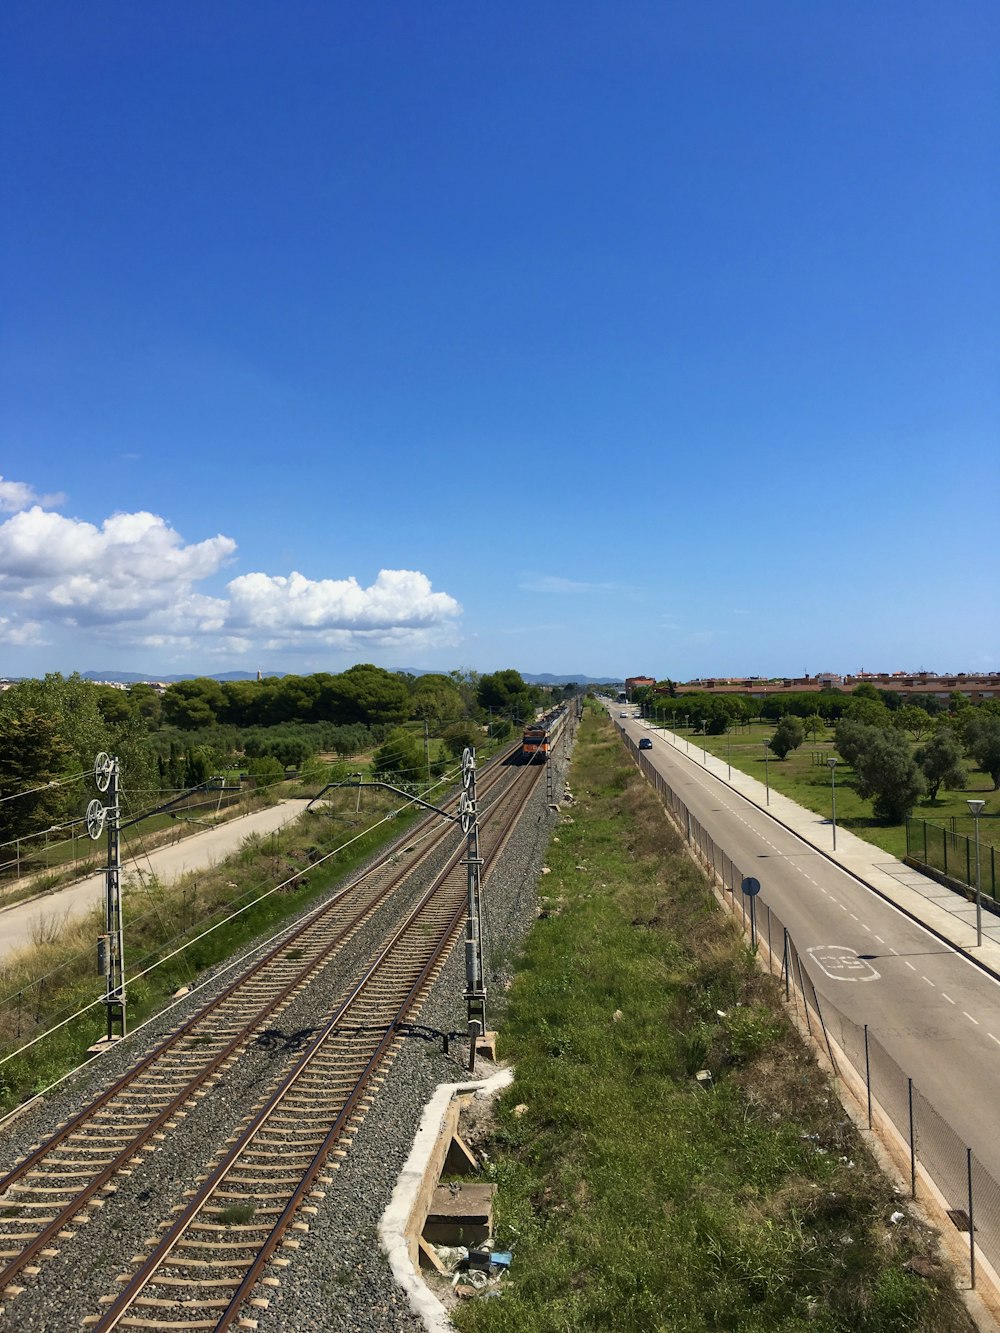 train rail under blue sky during daytime